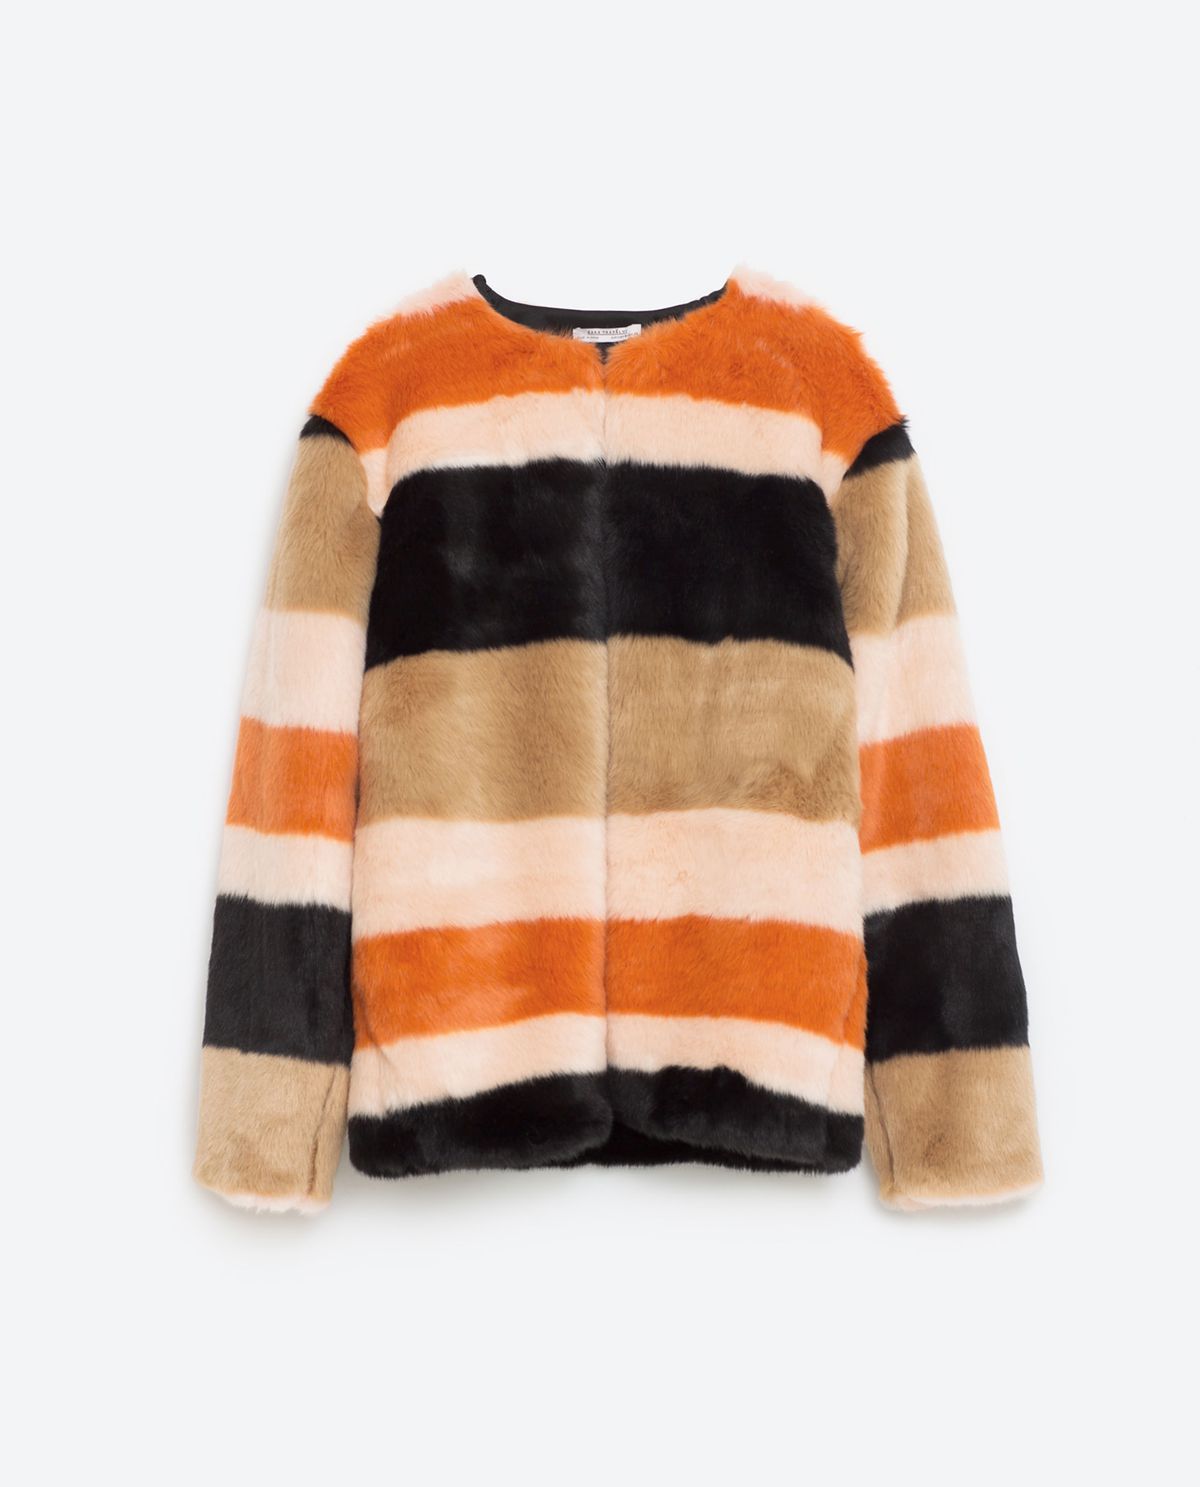 Zara Faux Fur Striped Coat, $100